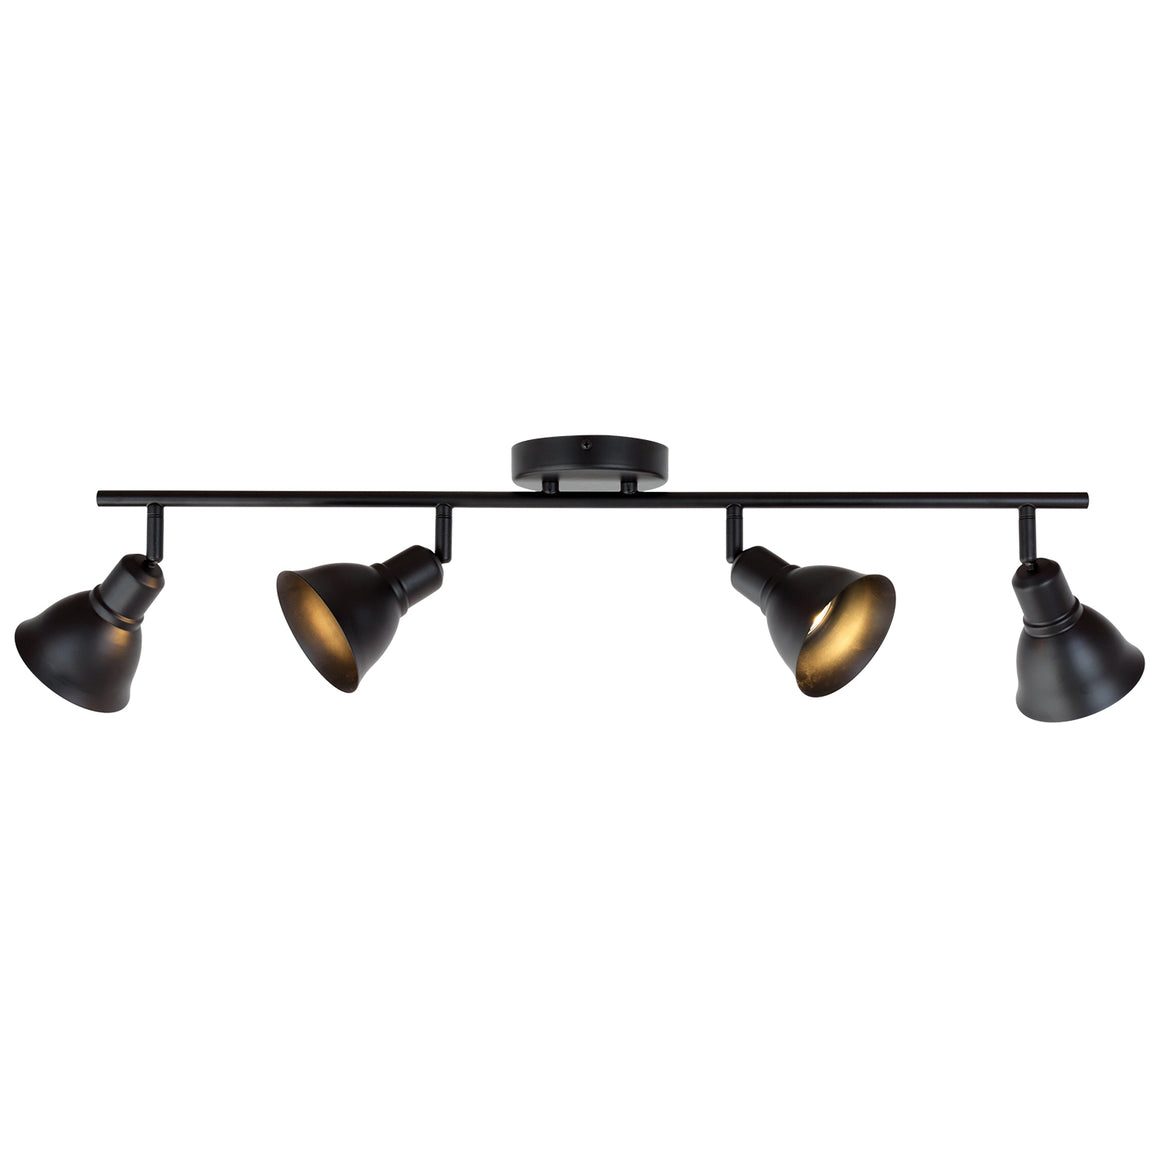 BONLICHT 4-Light Track Lighting Black, Spotlights Kitchen Light Fixtures Ceiling, 35W GU10 Base Halogen Bulbs Included